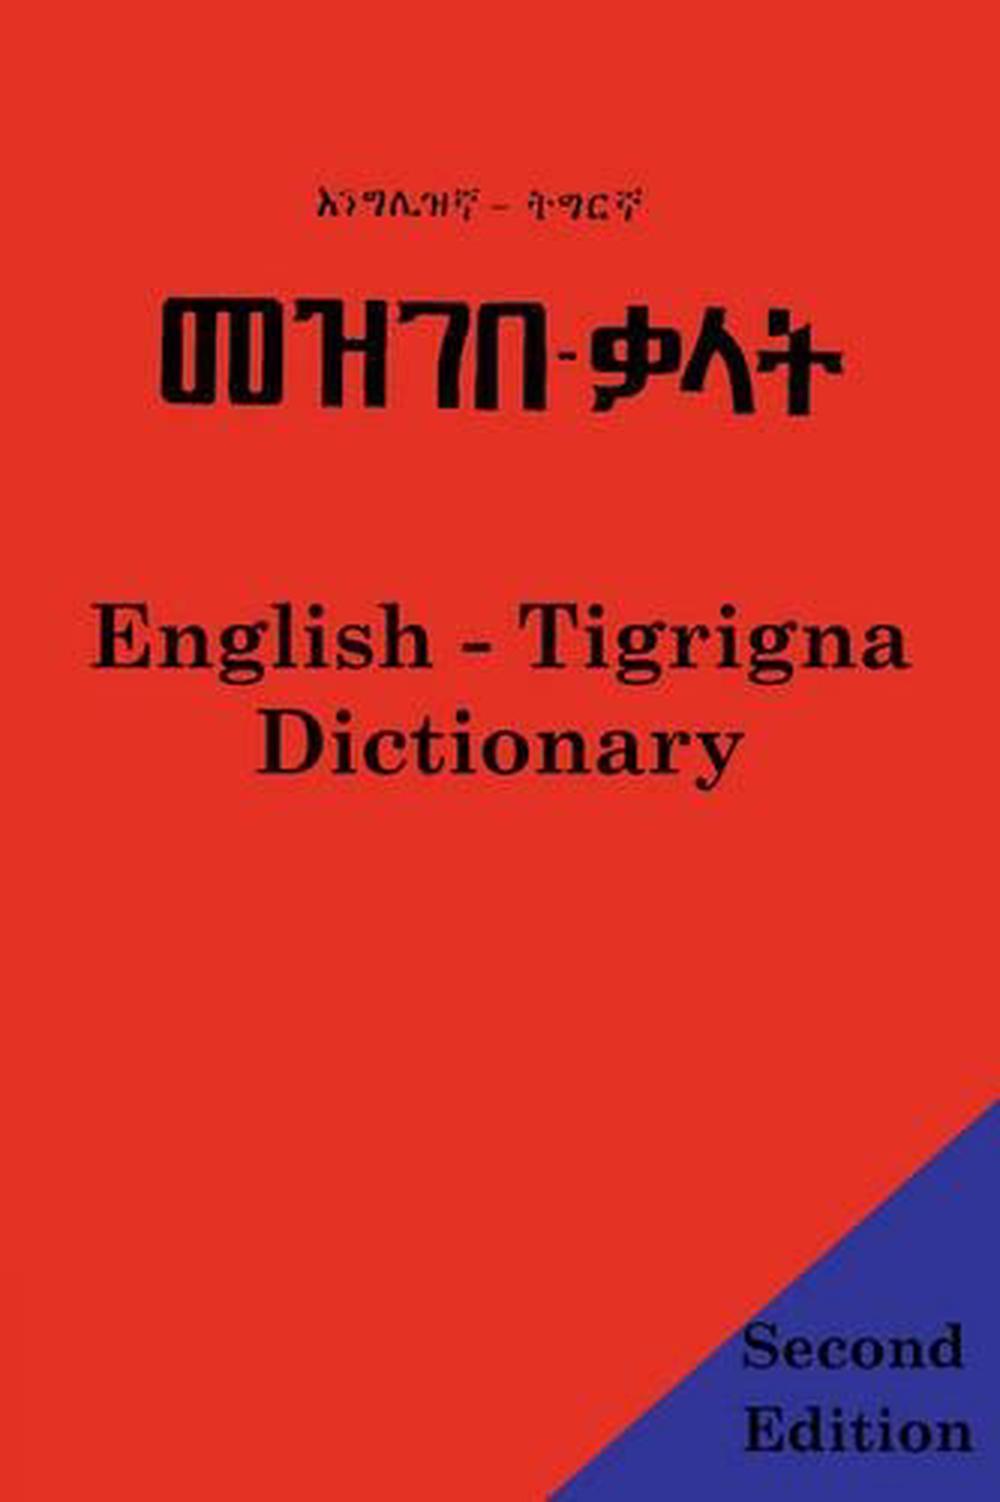 english-tigrigna-dictionary-by-abdel-rahman-english-paperback-book-free-ship-9781843560067